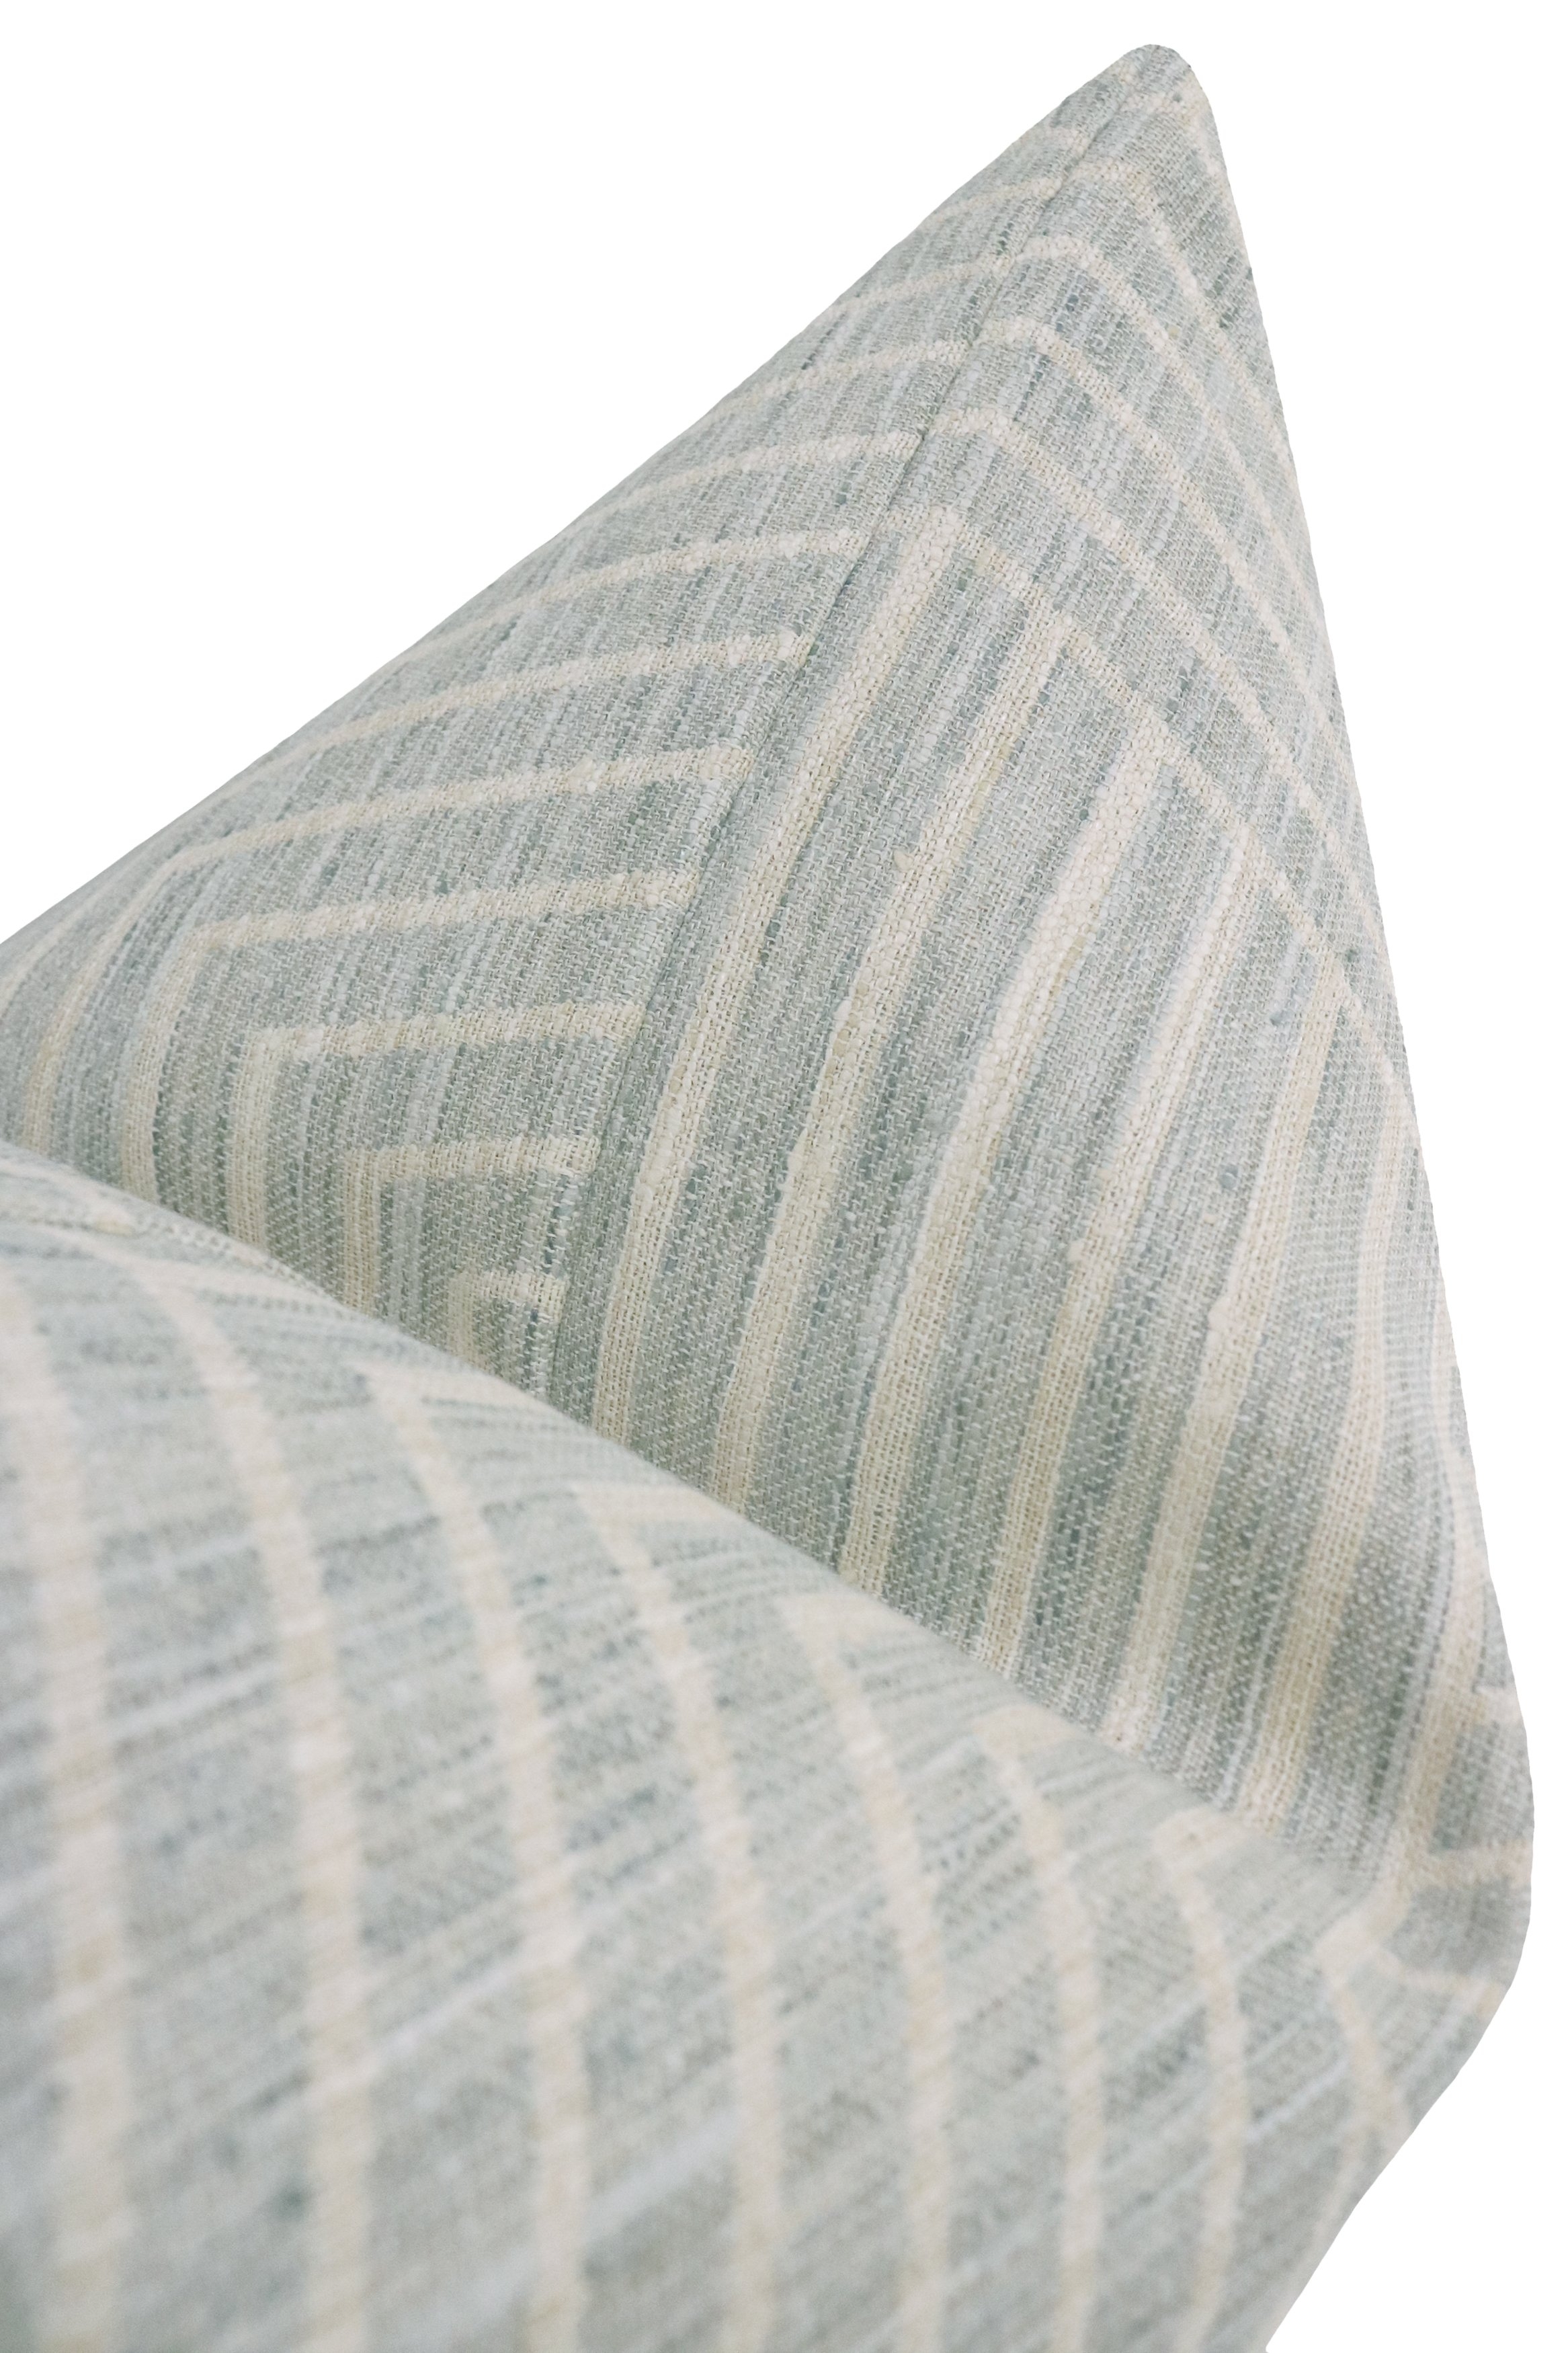 Labyrinth Linen Pillow, Spa Blue, 20" x 20" - Image 2